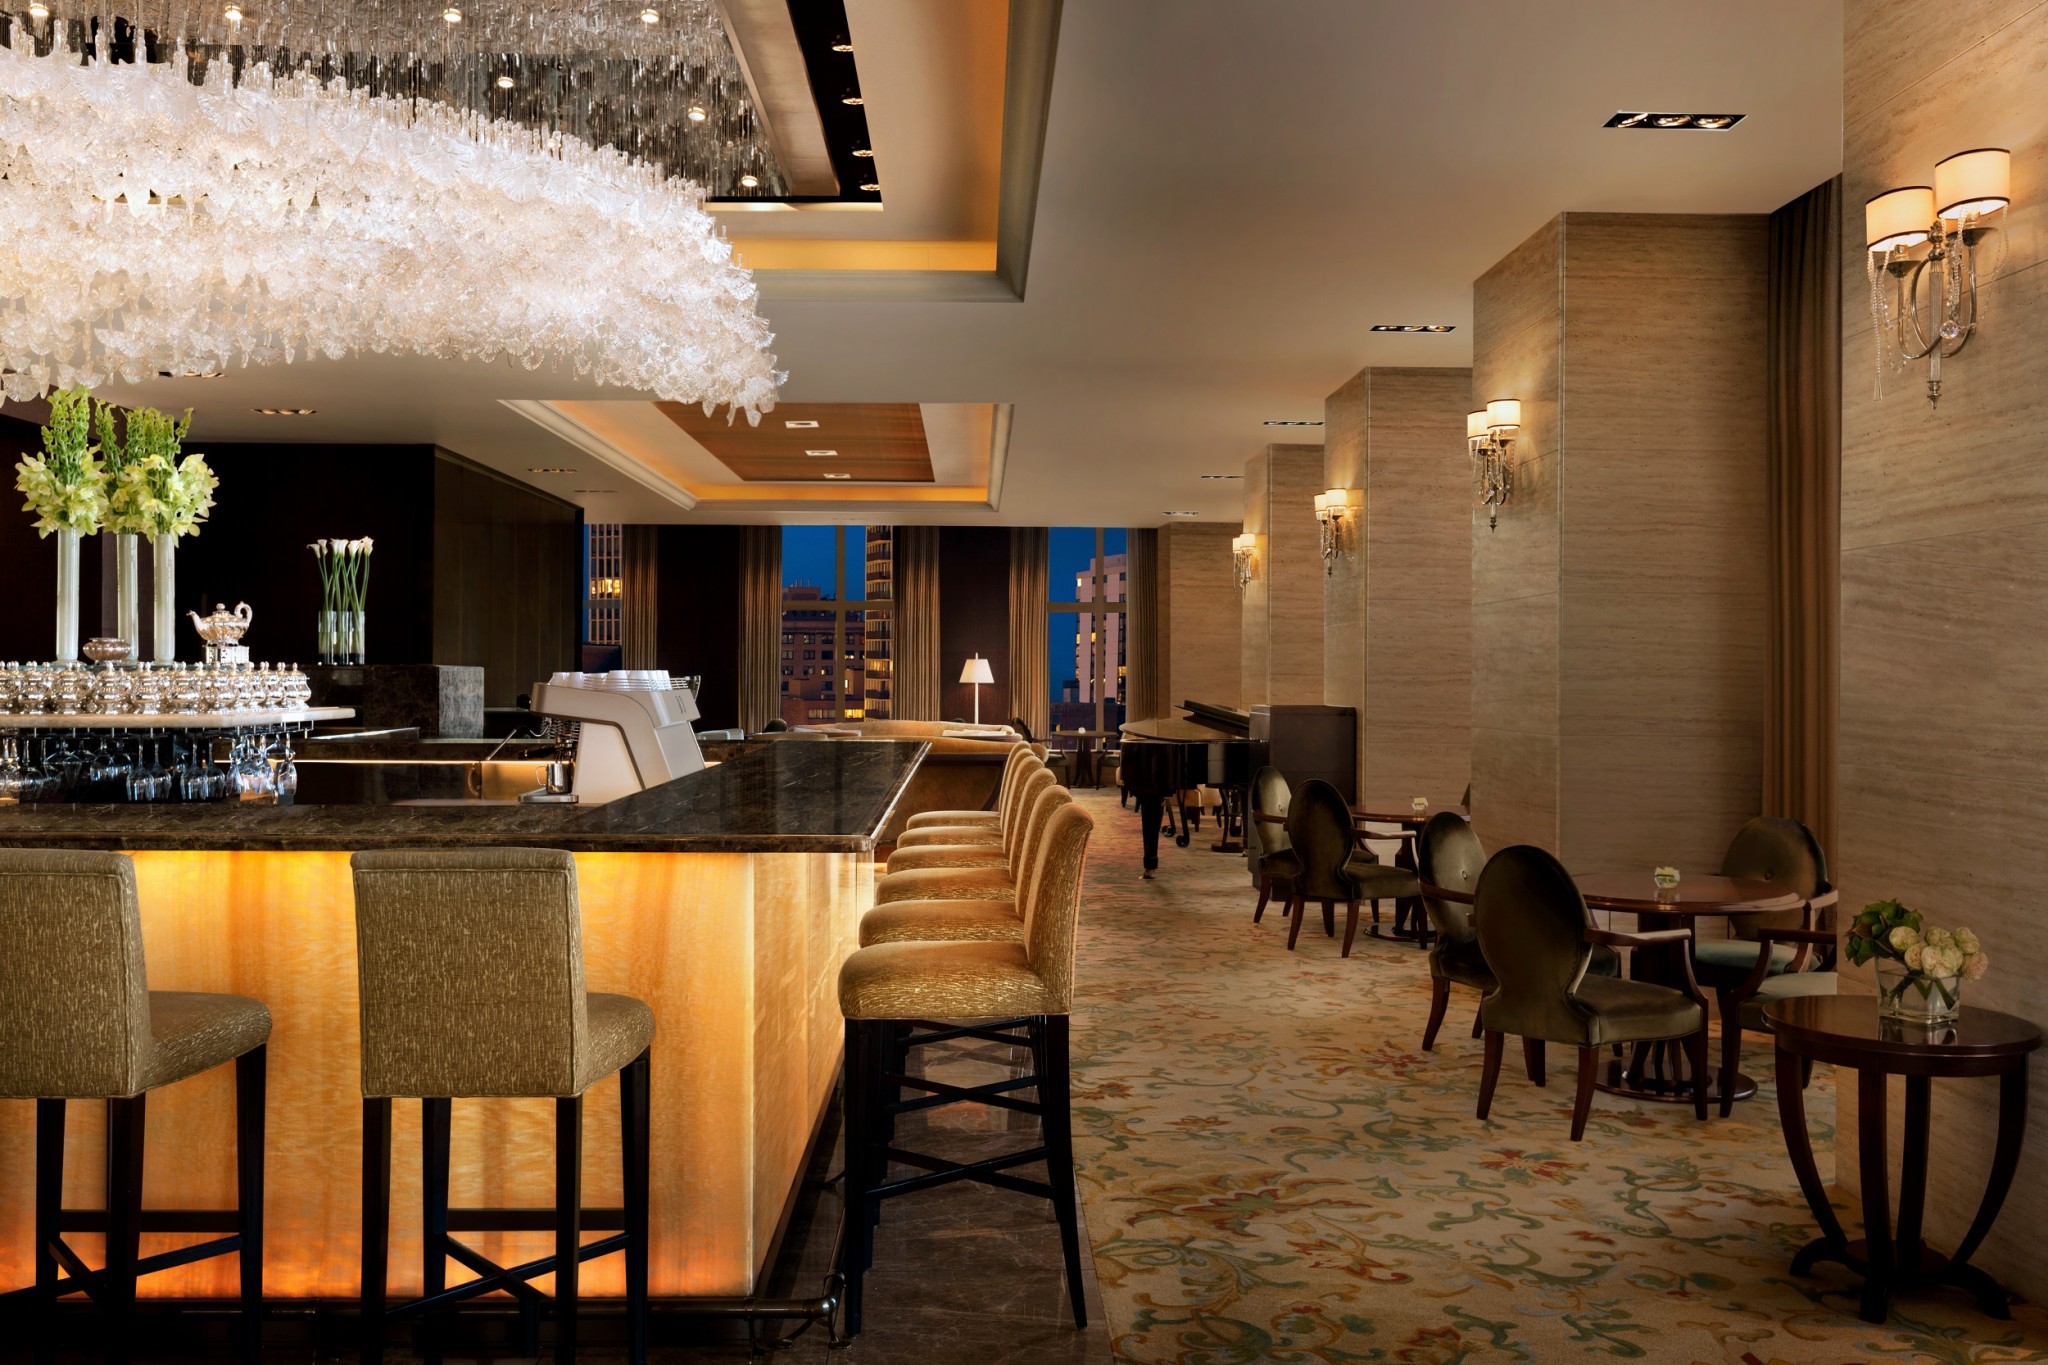 Shangri-La Hotel Tokyo - The Lobby Lounge - 1250837m